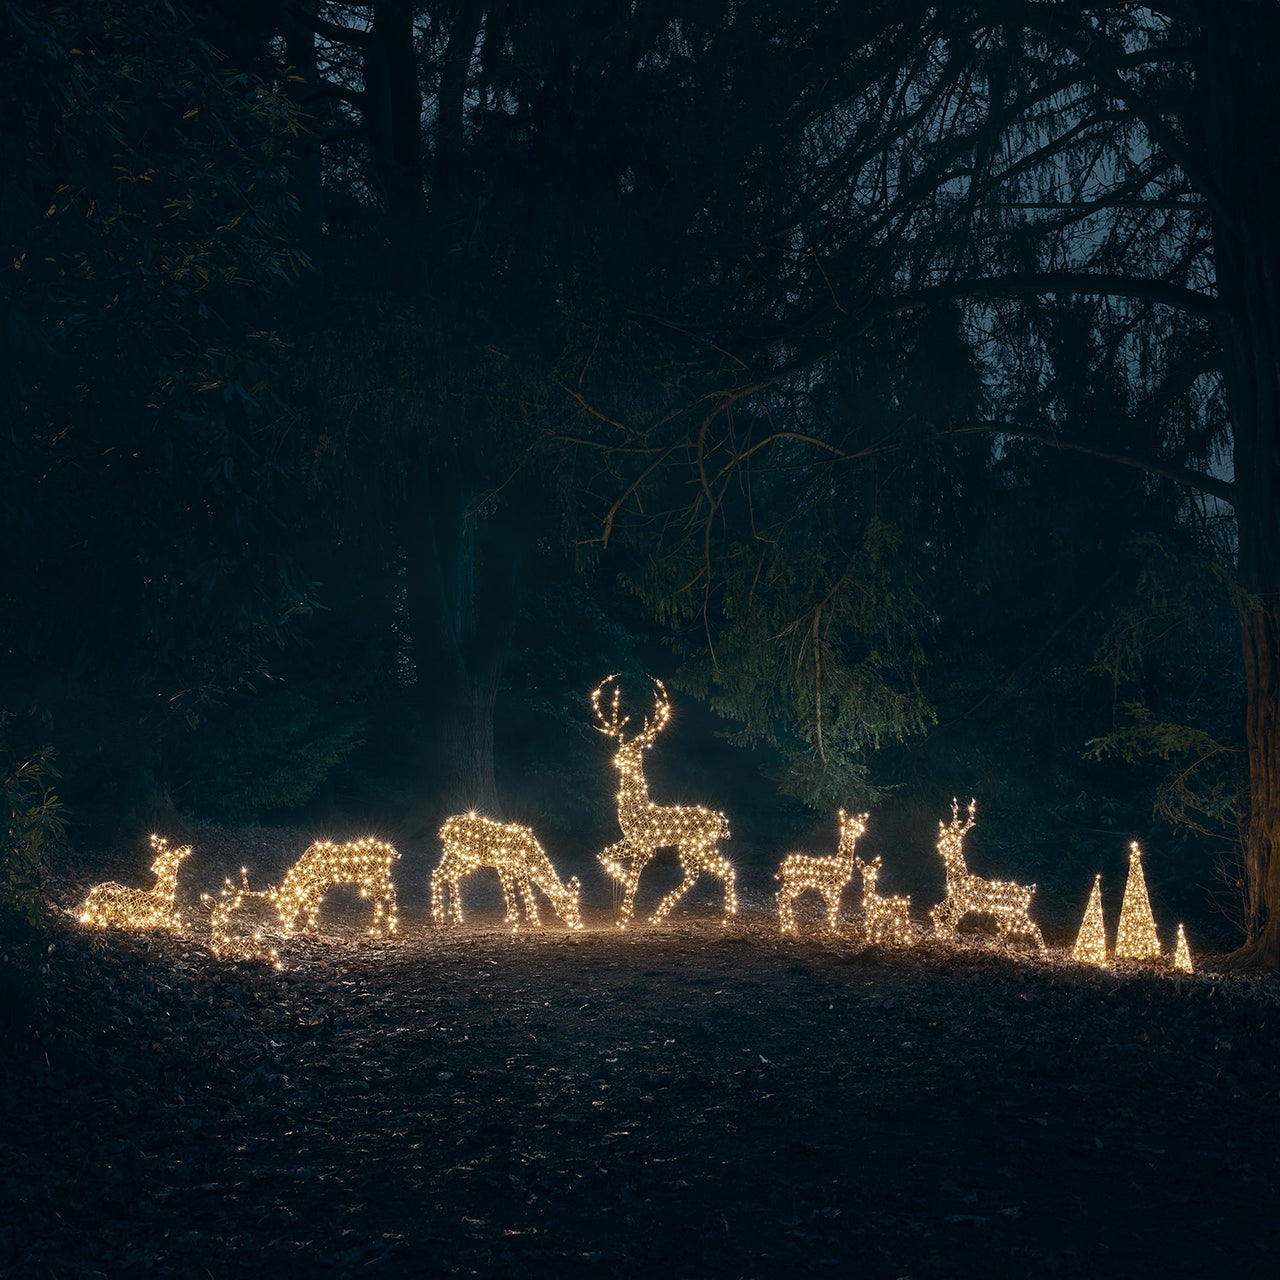 Studley Rattan Resting Light Up Reindeer Family 24v